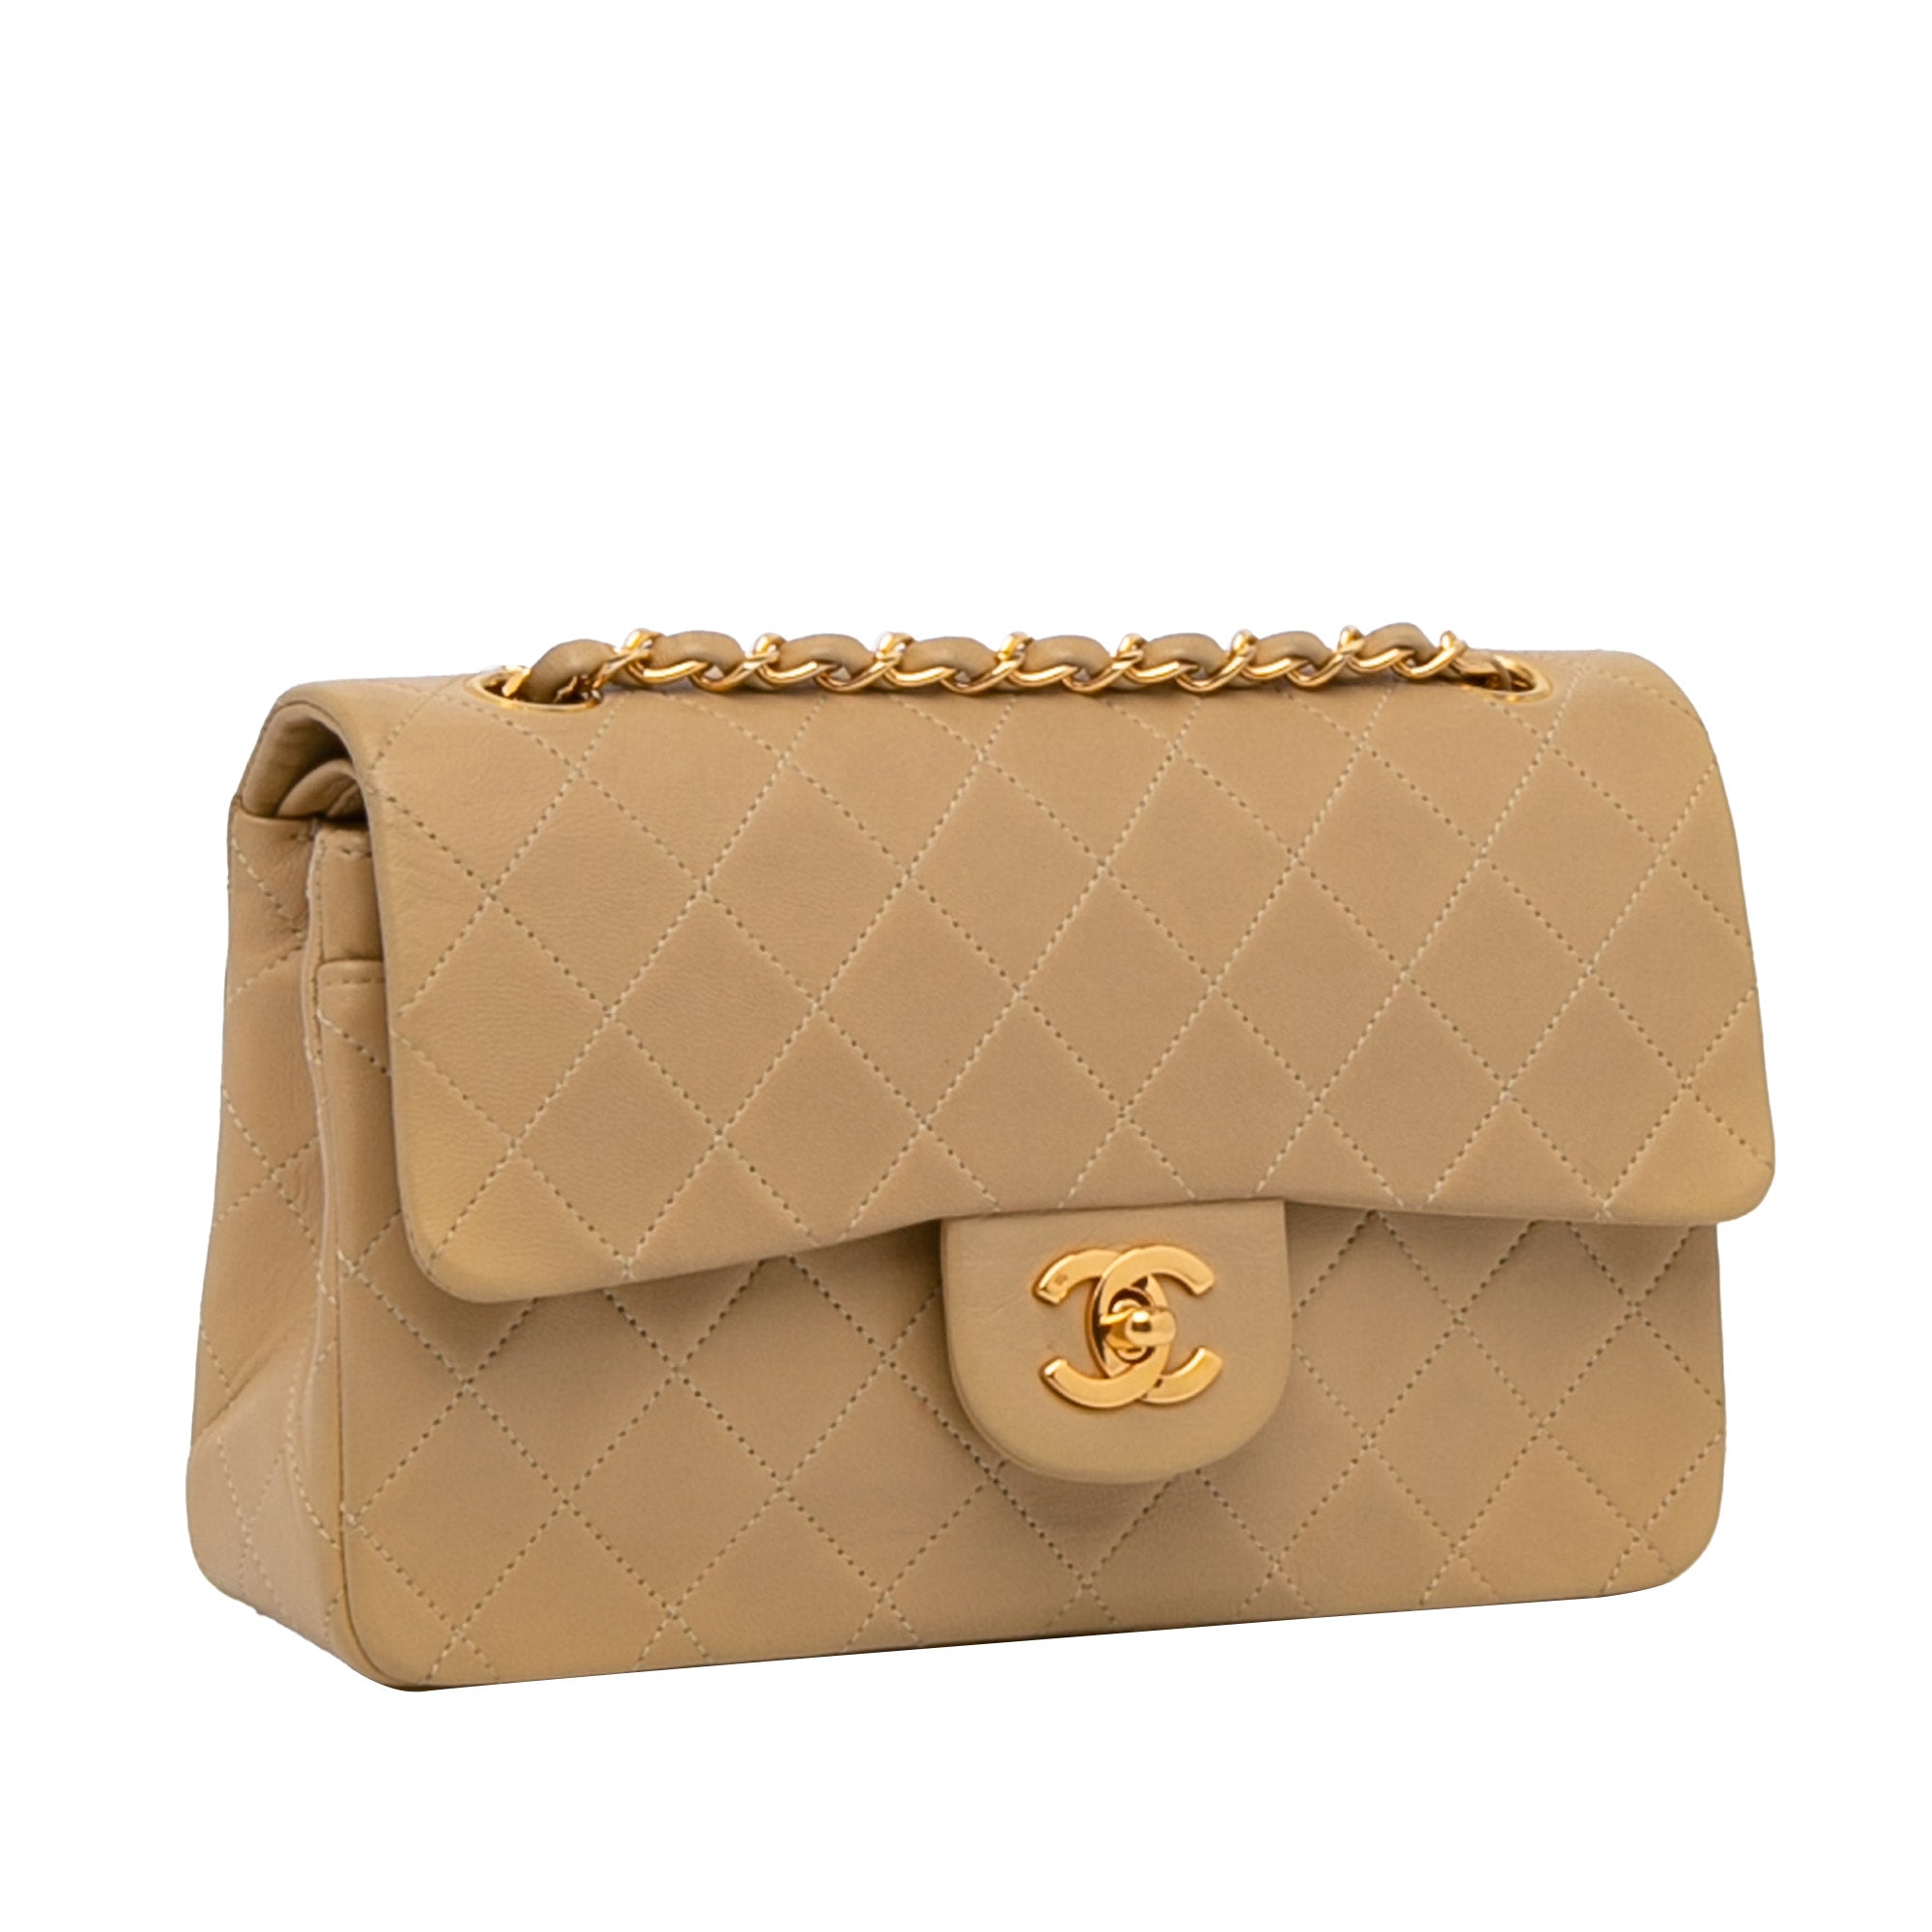 Chanel 19 Flap Bag Review - Lauren Kay Sims